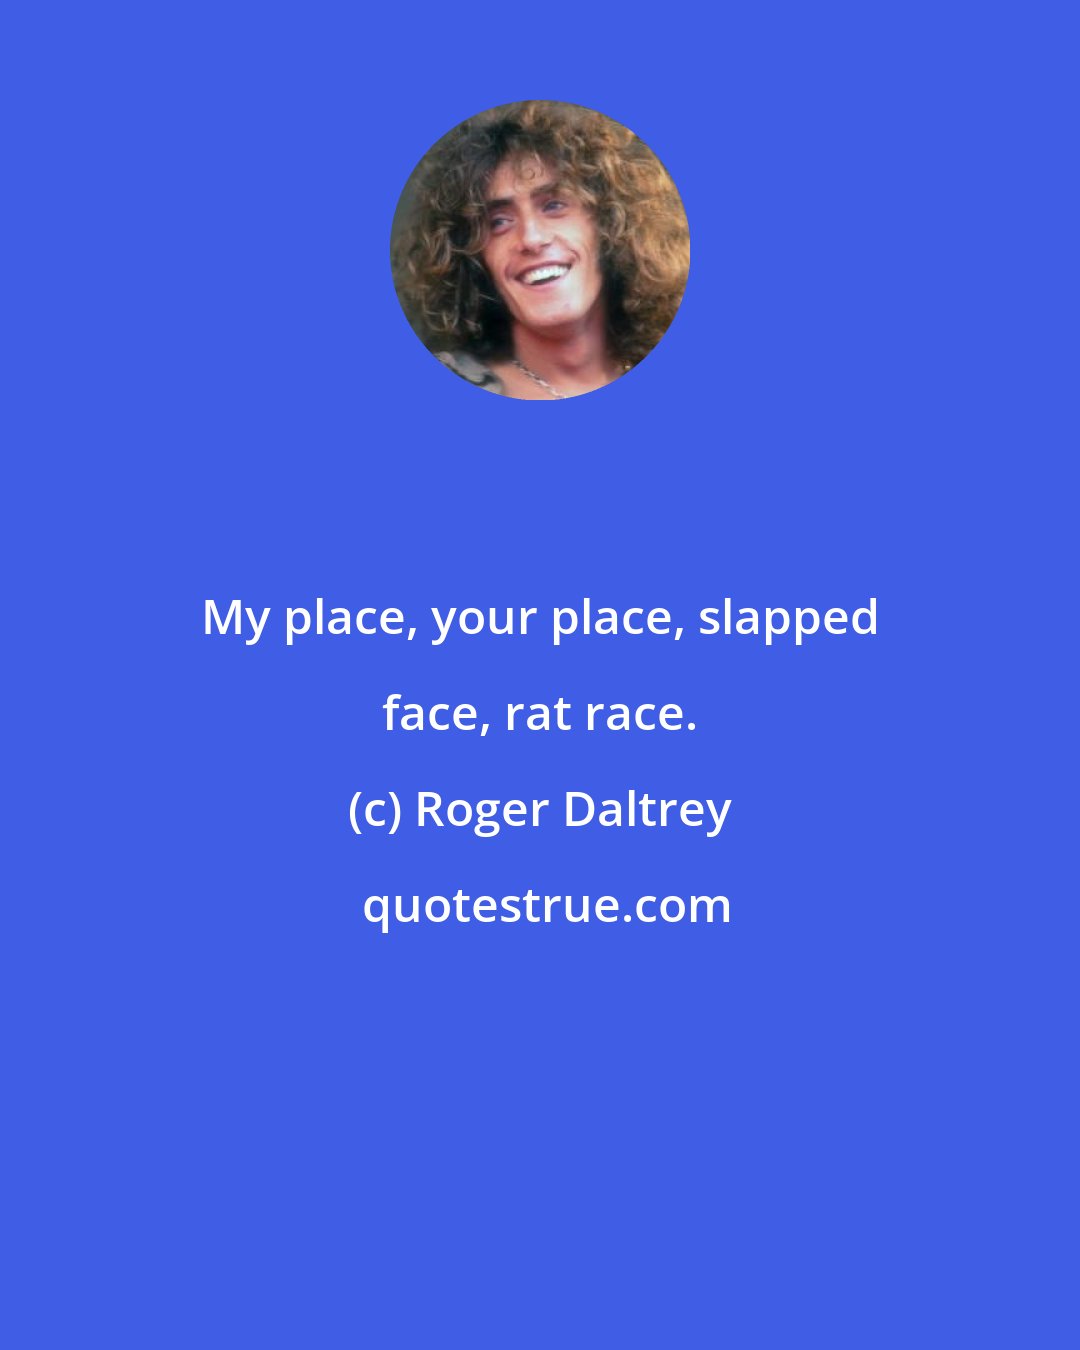 Roger Daltrey: My place, your place, slapped face, rat race.